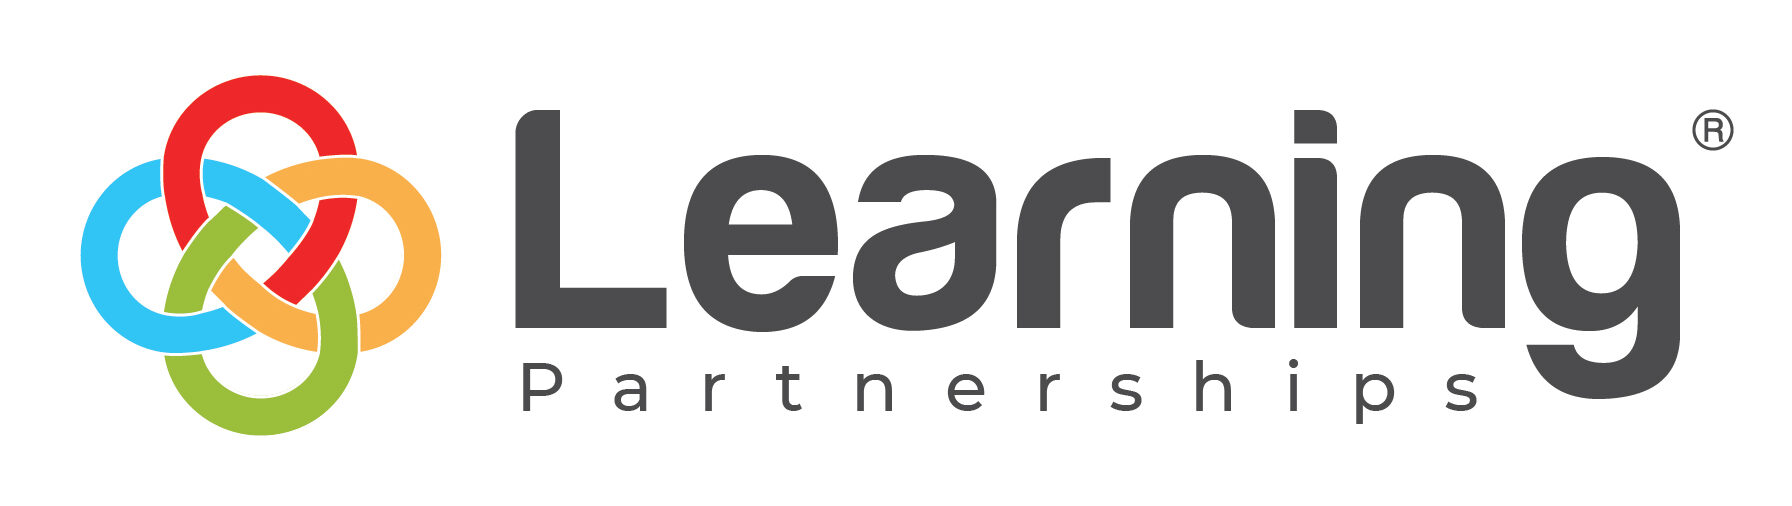 Learning Partnerships Pty Ltd. Logo